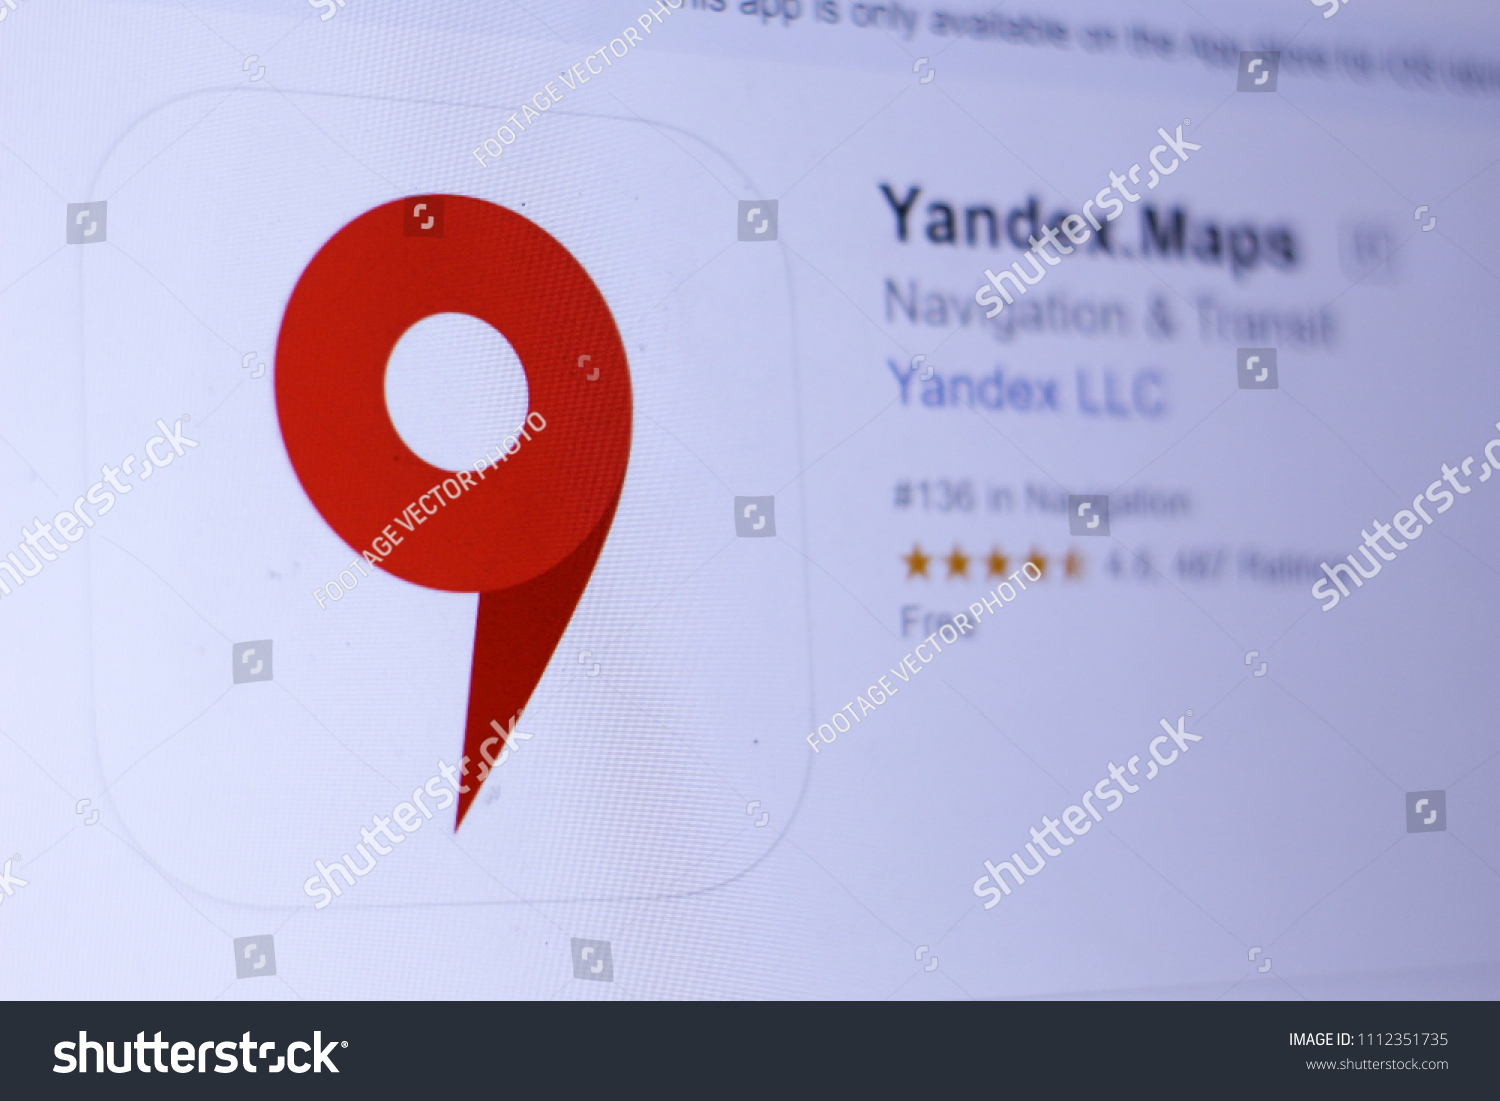 yandex maps logo